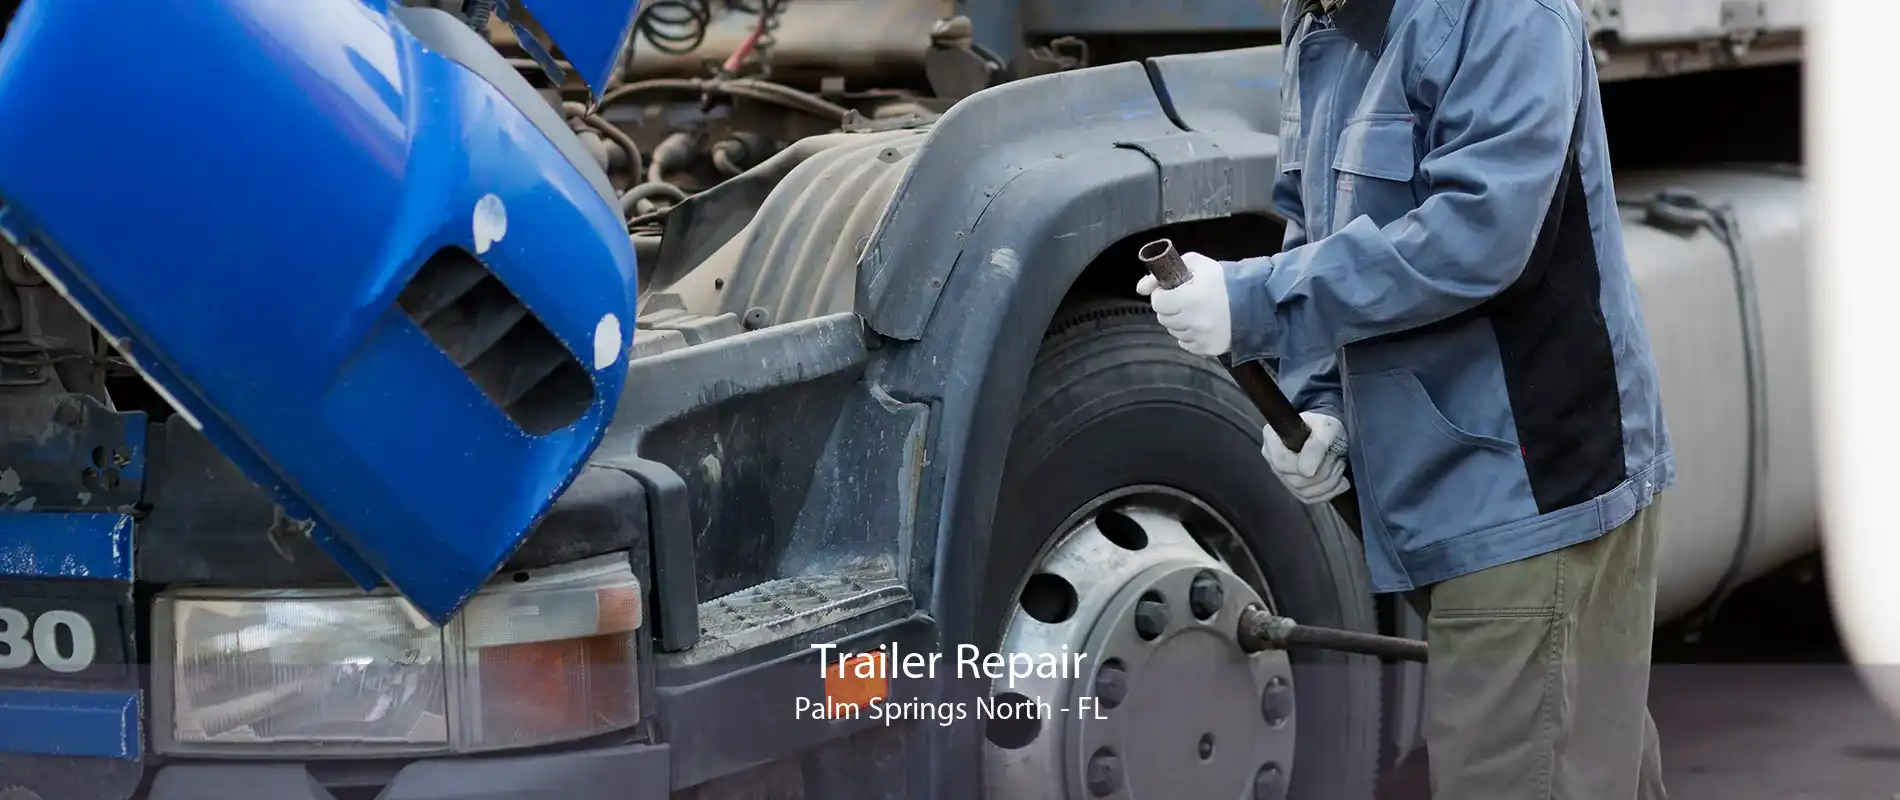 Trailer Repair Palm Springs North - FL